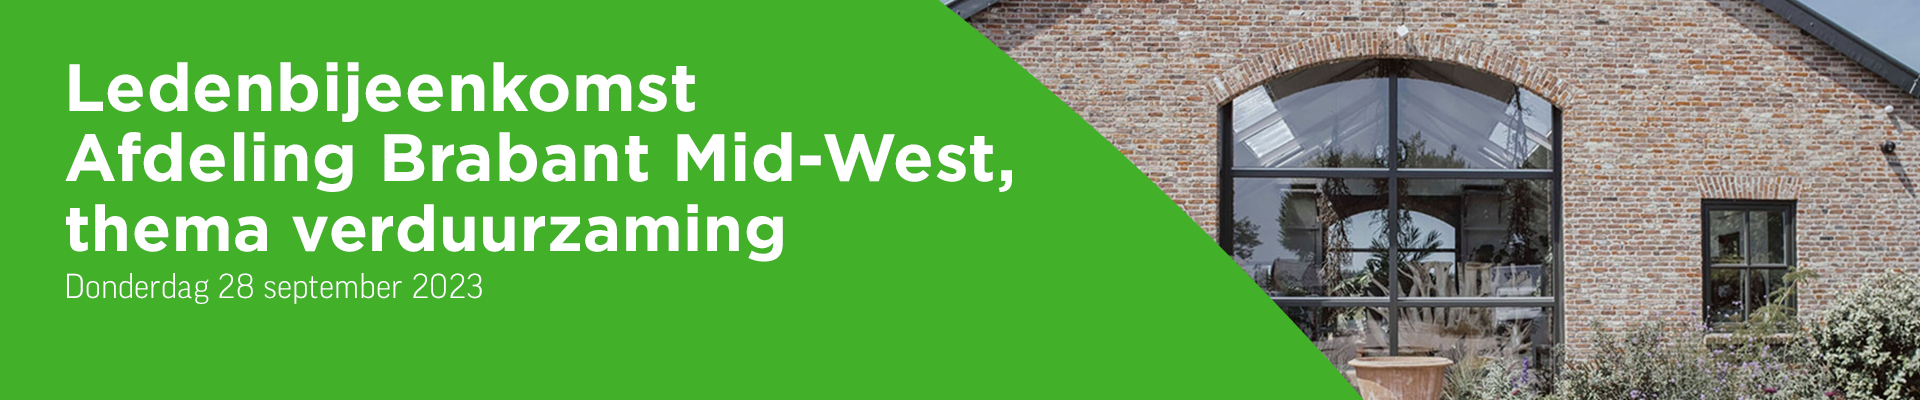 Ledenbijeenkomst afdeling Brabant Mid-West, thema verduurzaming